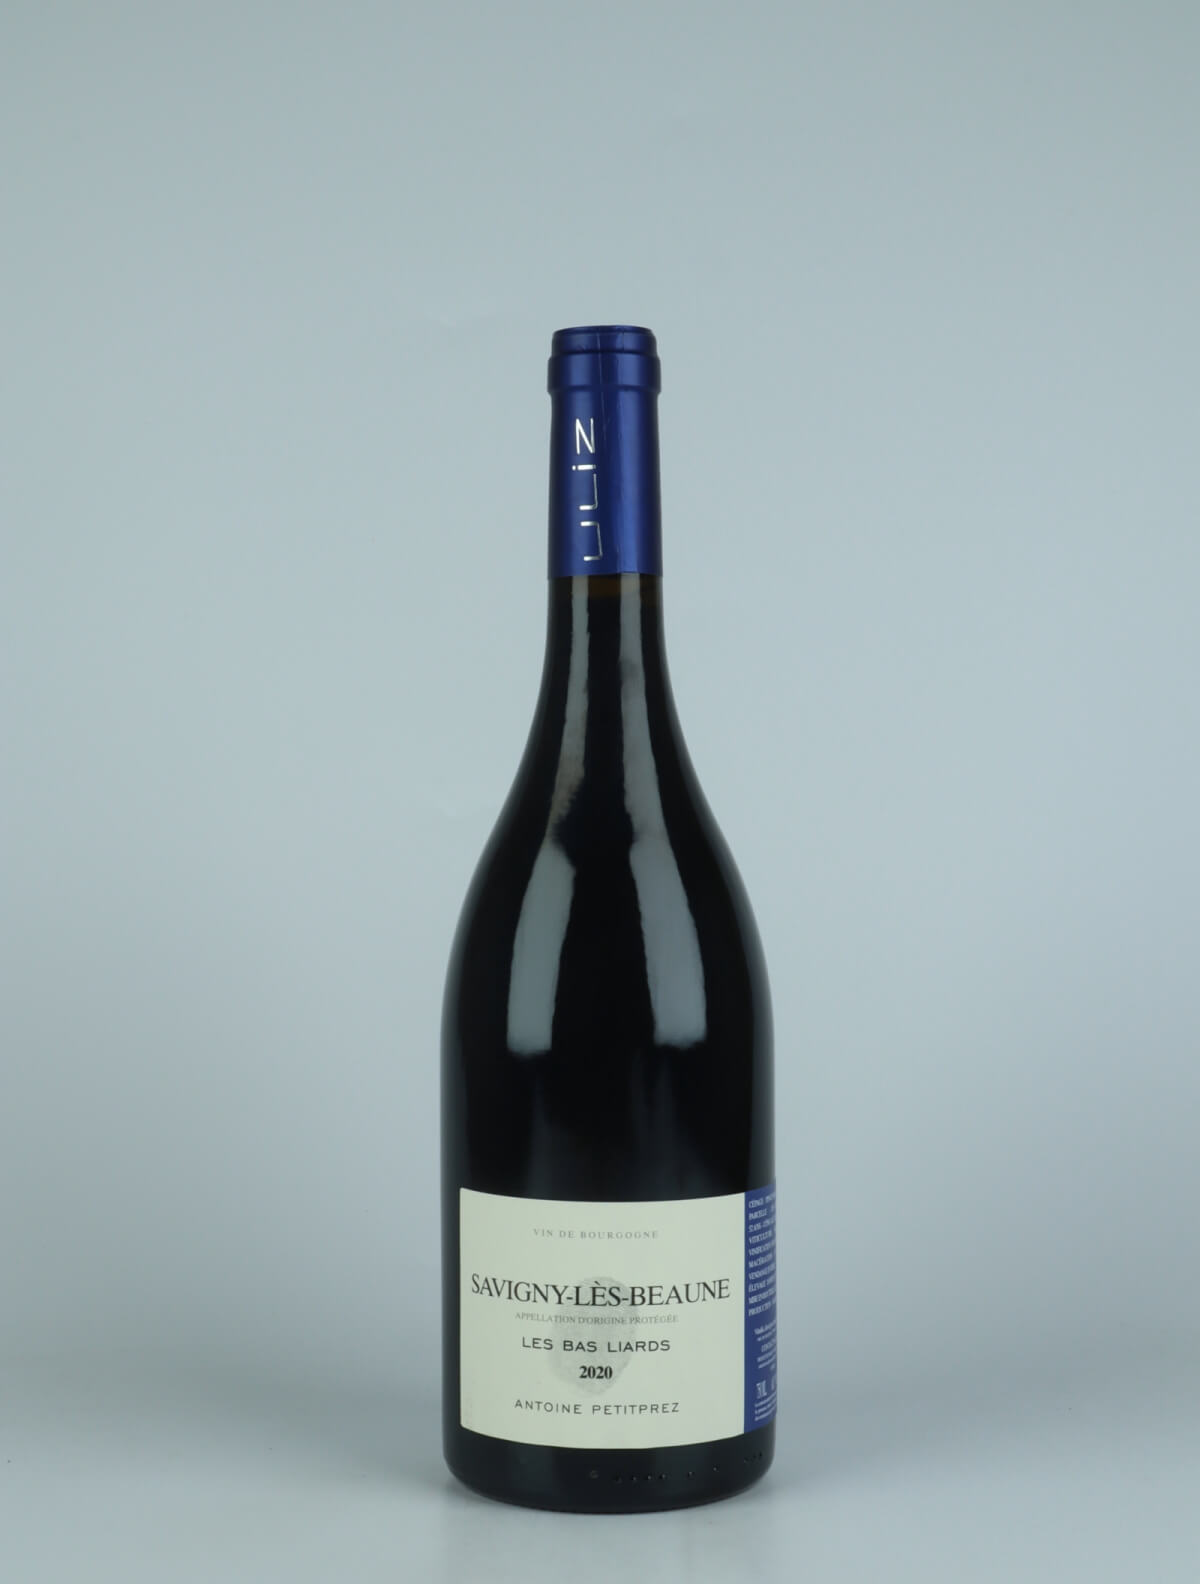 En flaske 2020 Savigny les Beaune - Les Bas Liards Rødvin fra Antoine Petitprez, Bourgogne i Frankrig